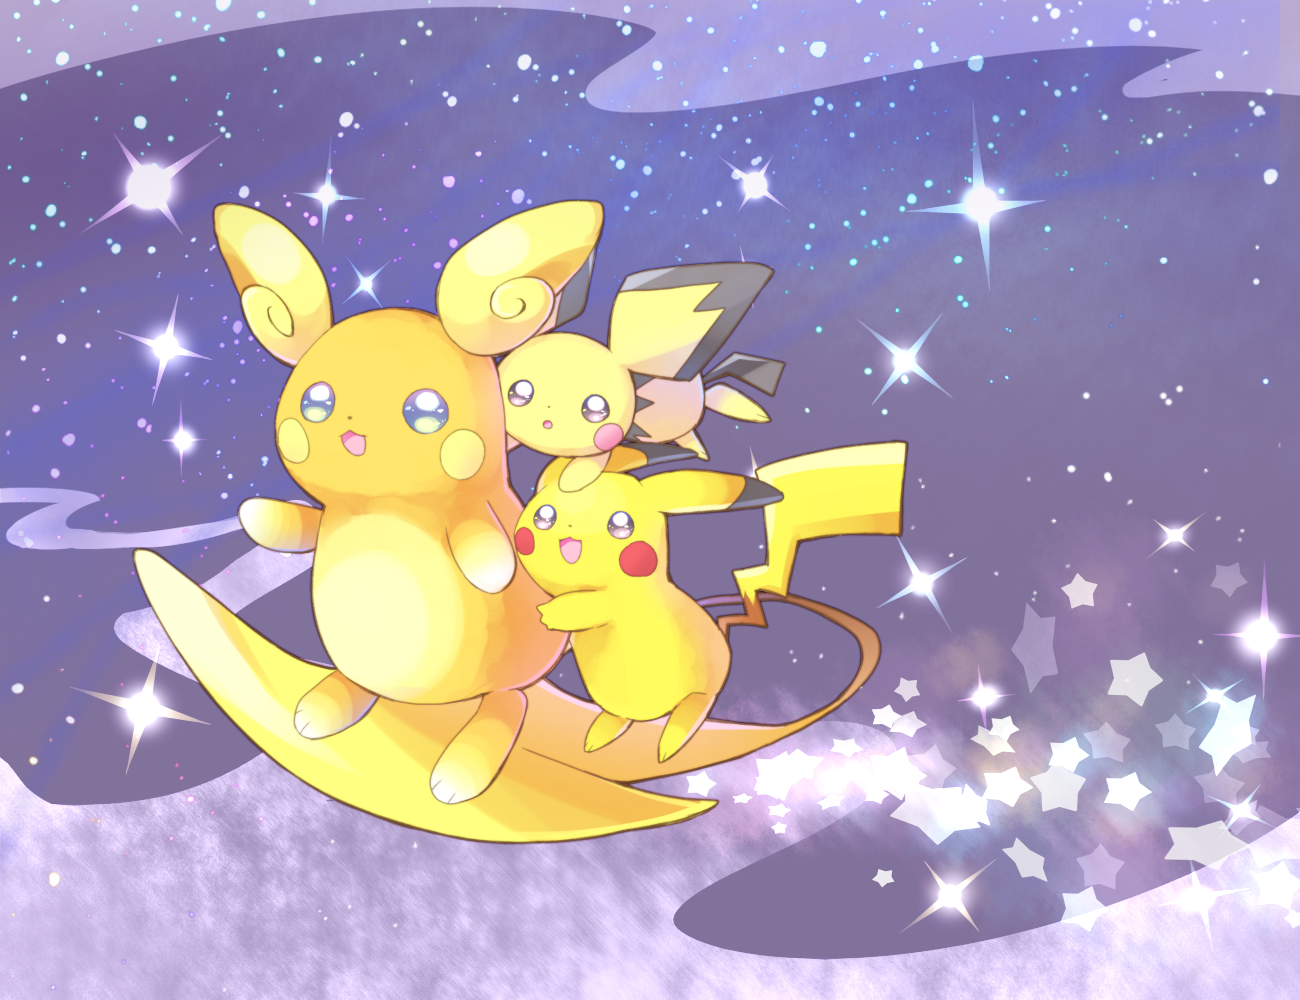 Pichu and Pikachu surfing with Alolan Raichu. Pokémon Sun